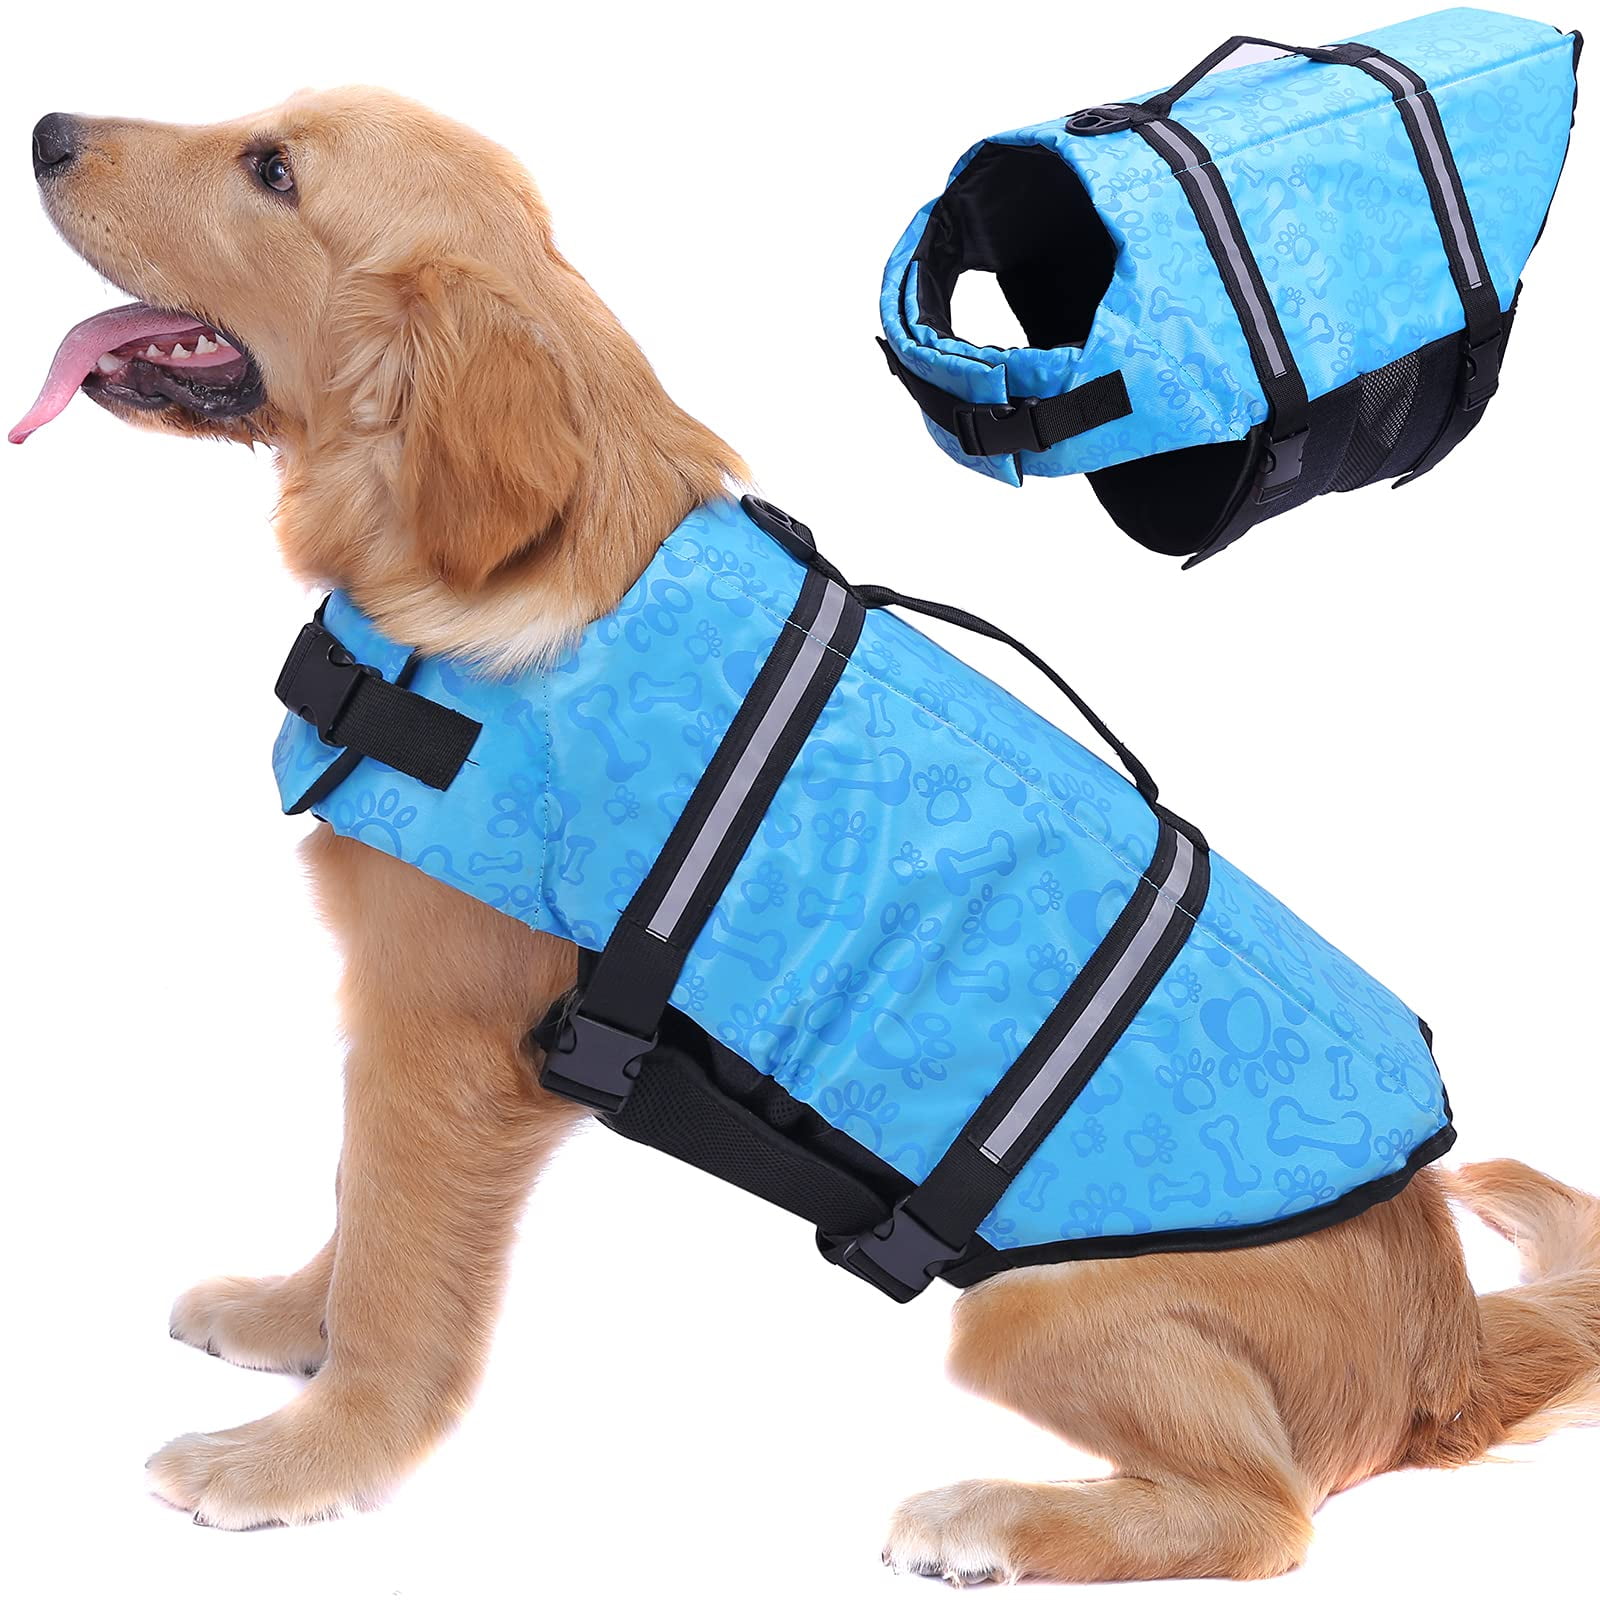 NEW Dog‘s Preserver Boat Safety Vest Life Jacket Outdoor Swimming Clothe XXS-XXL 